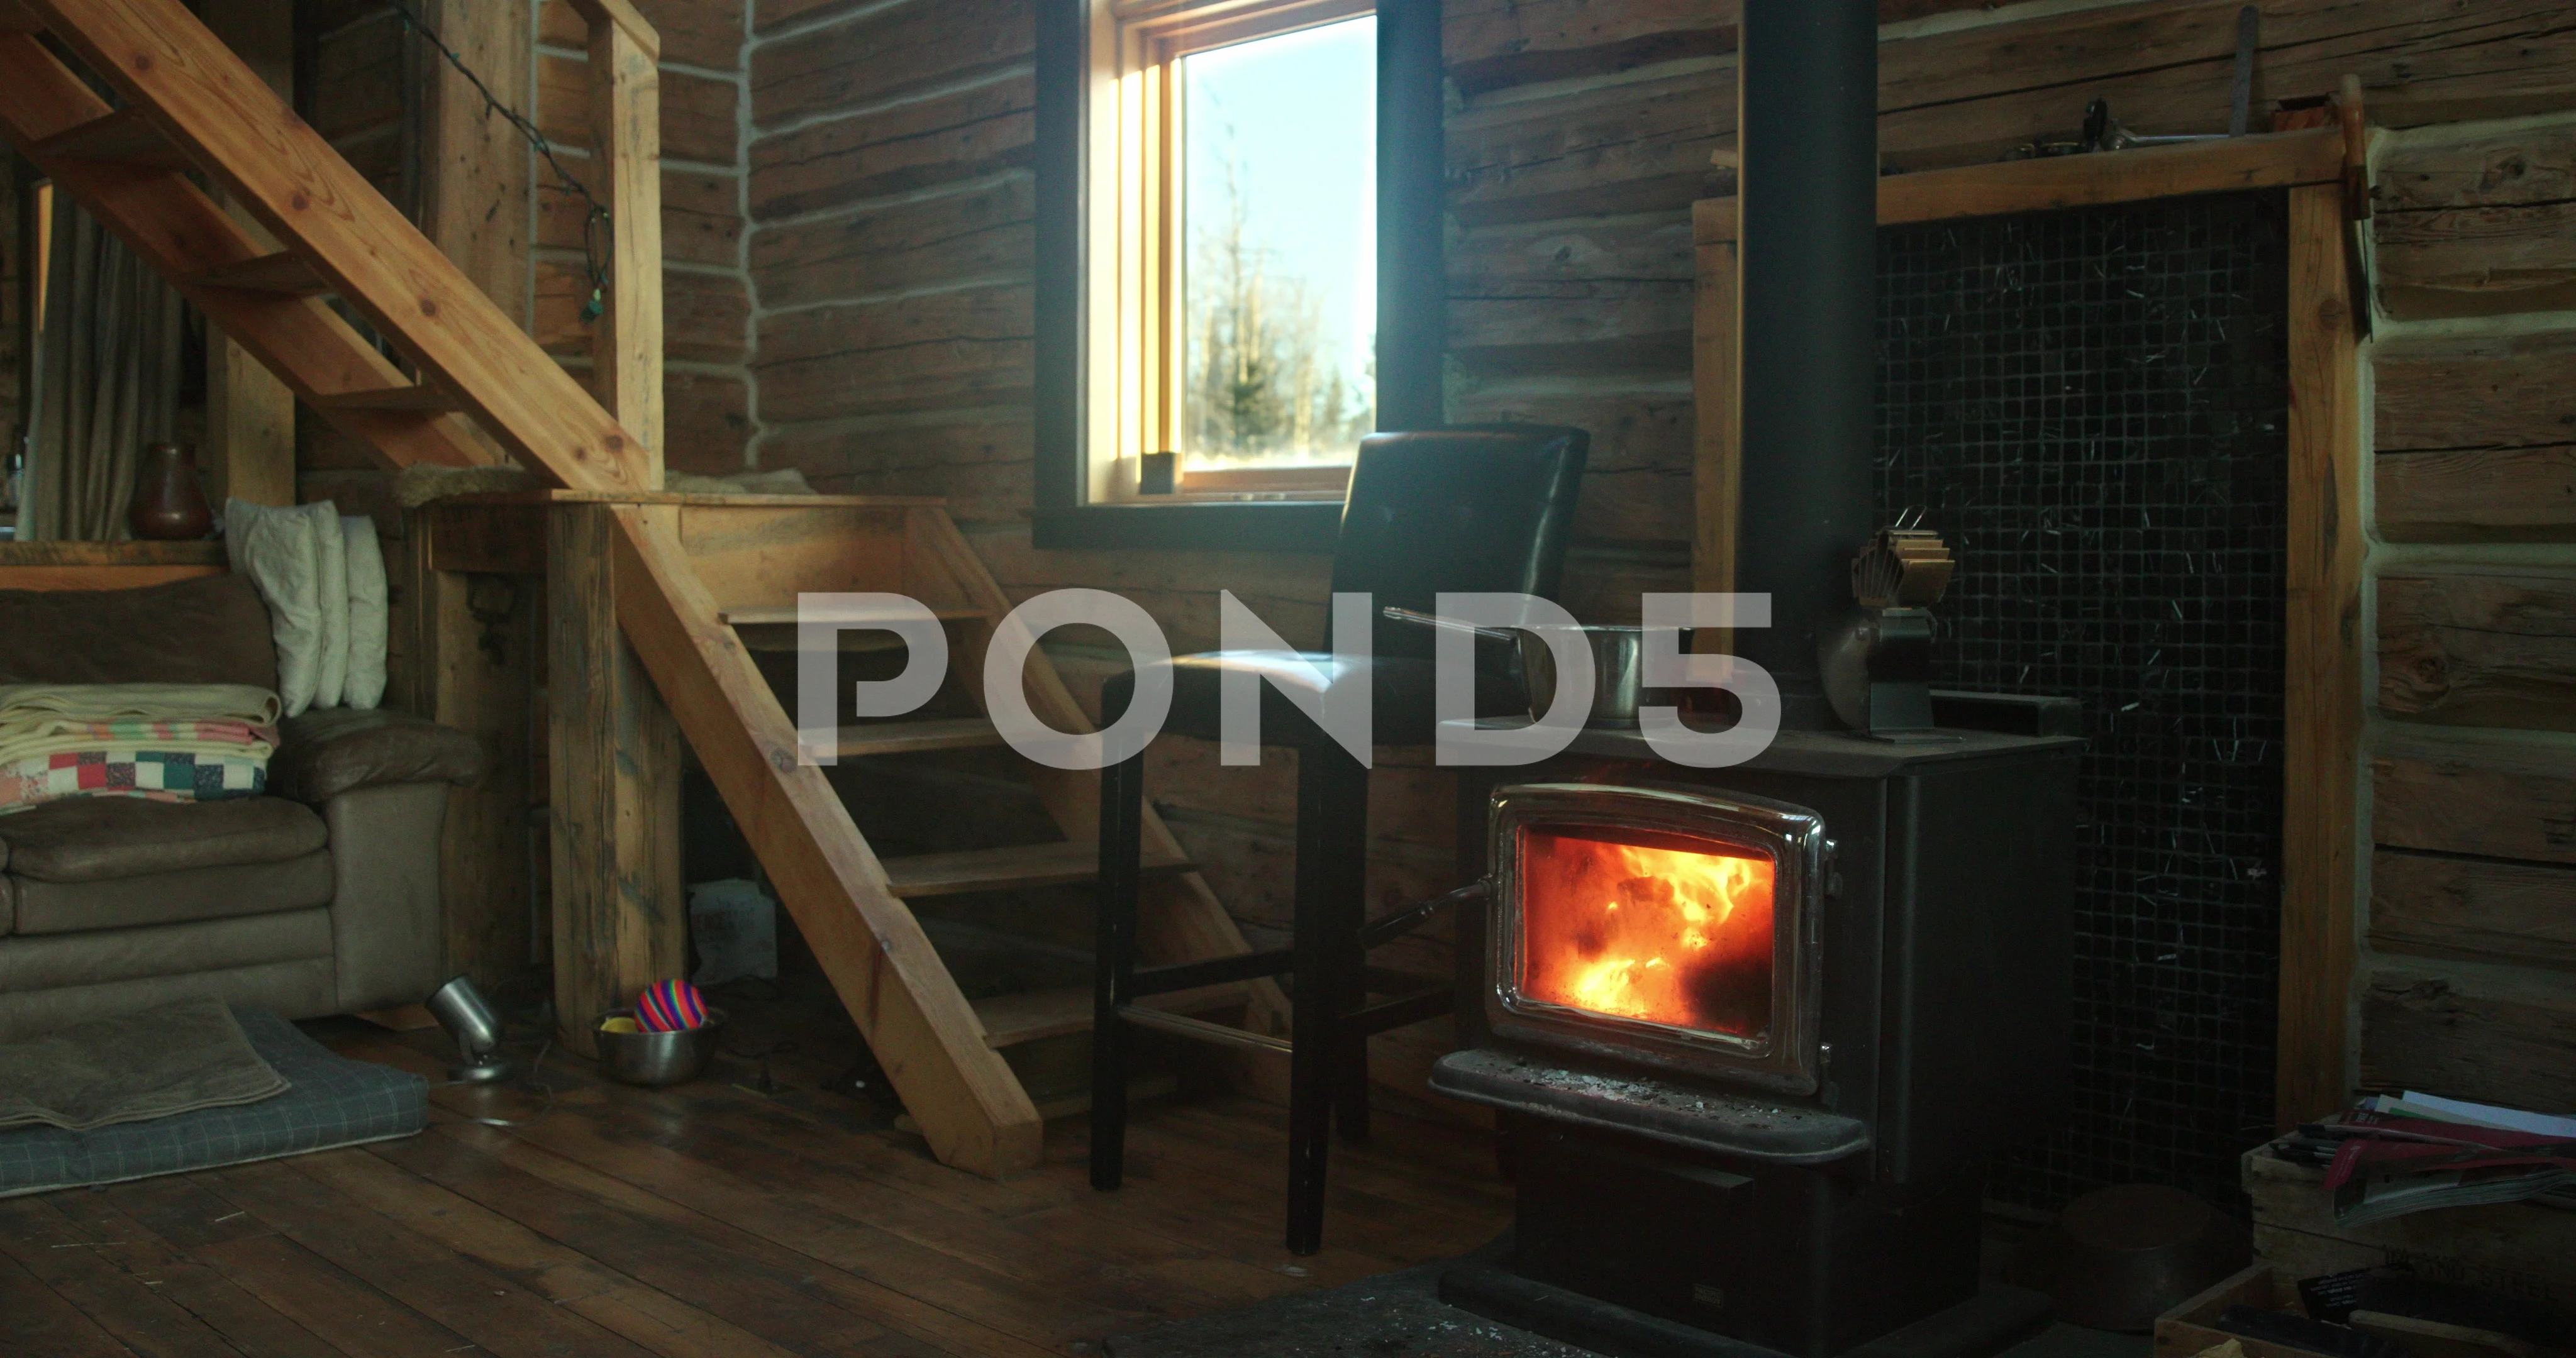 log cabin interior fireplace